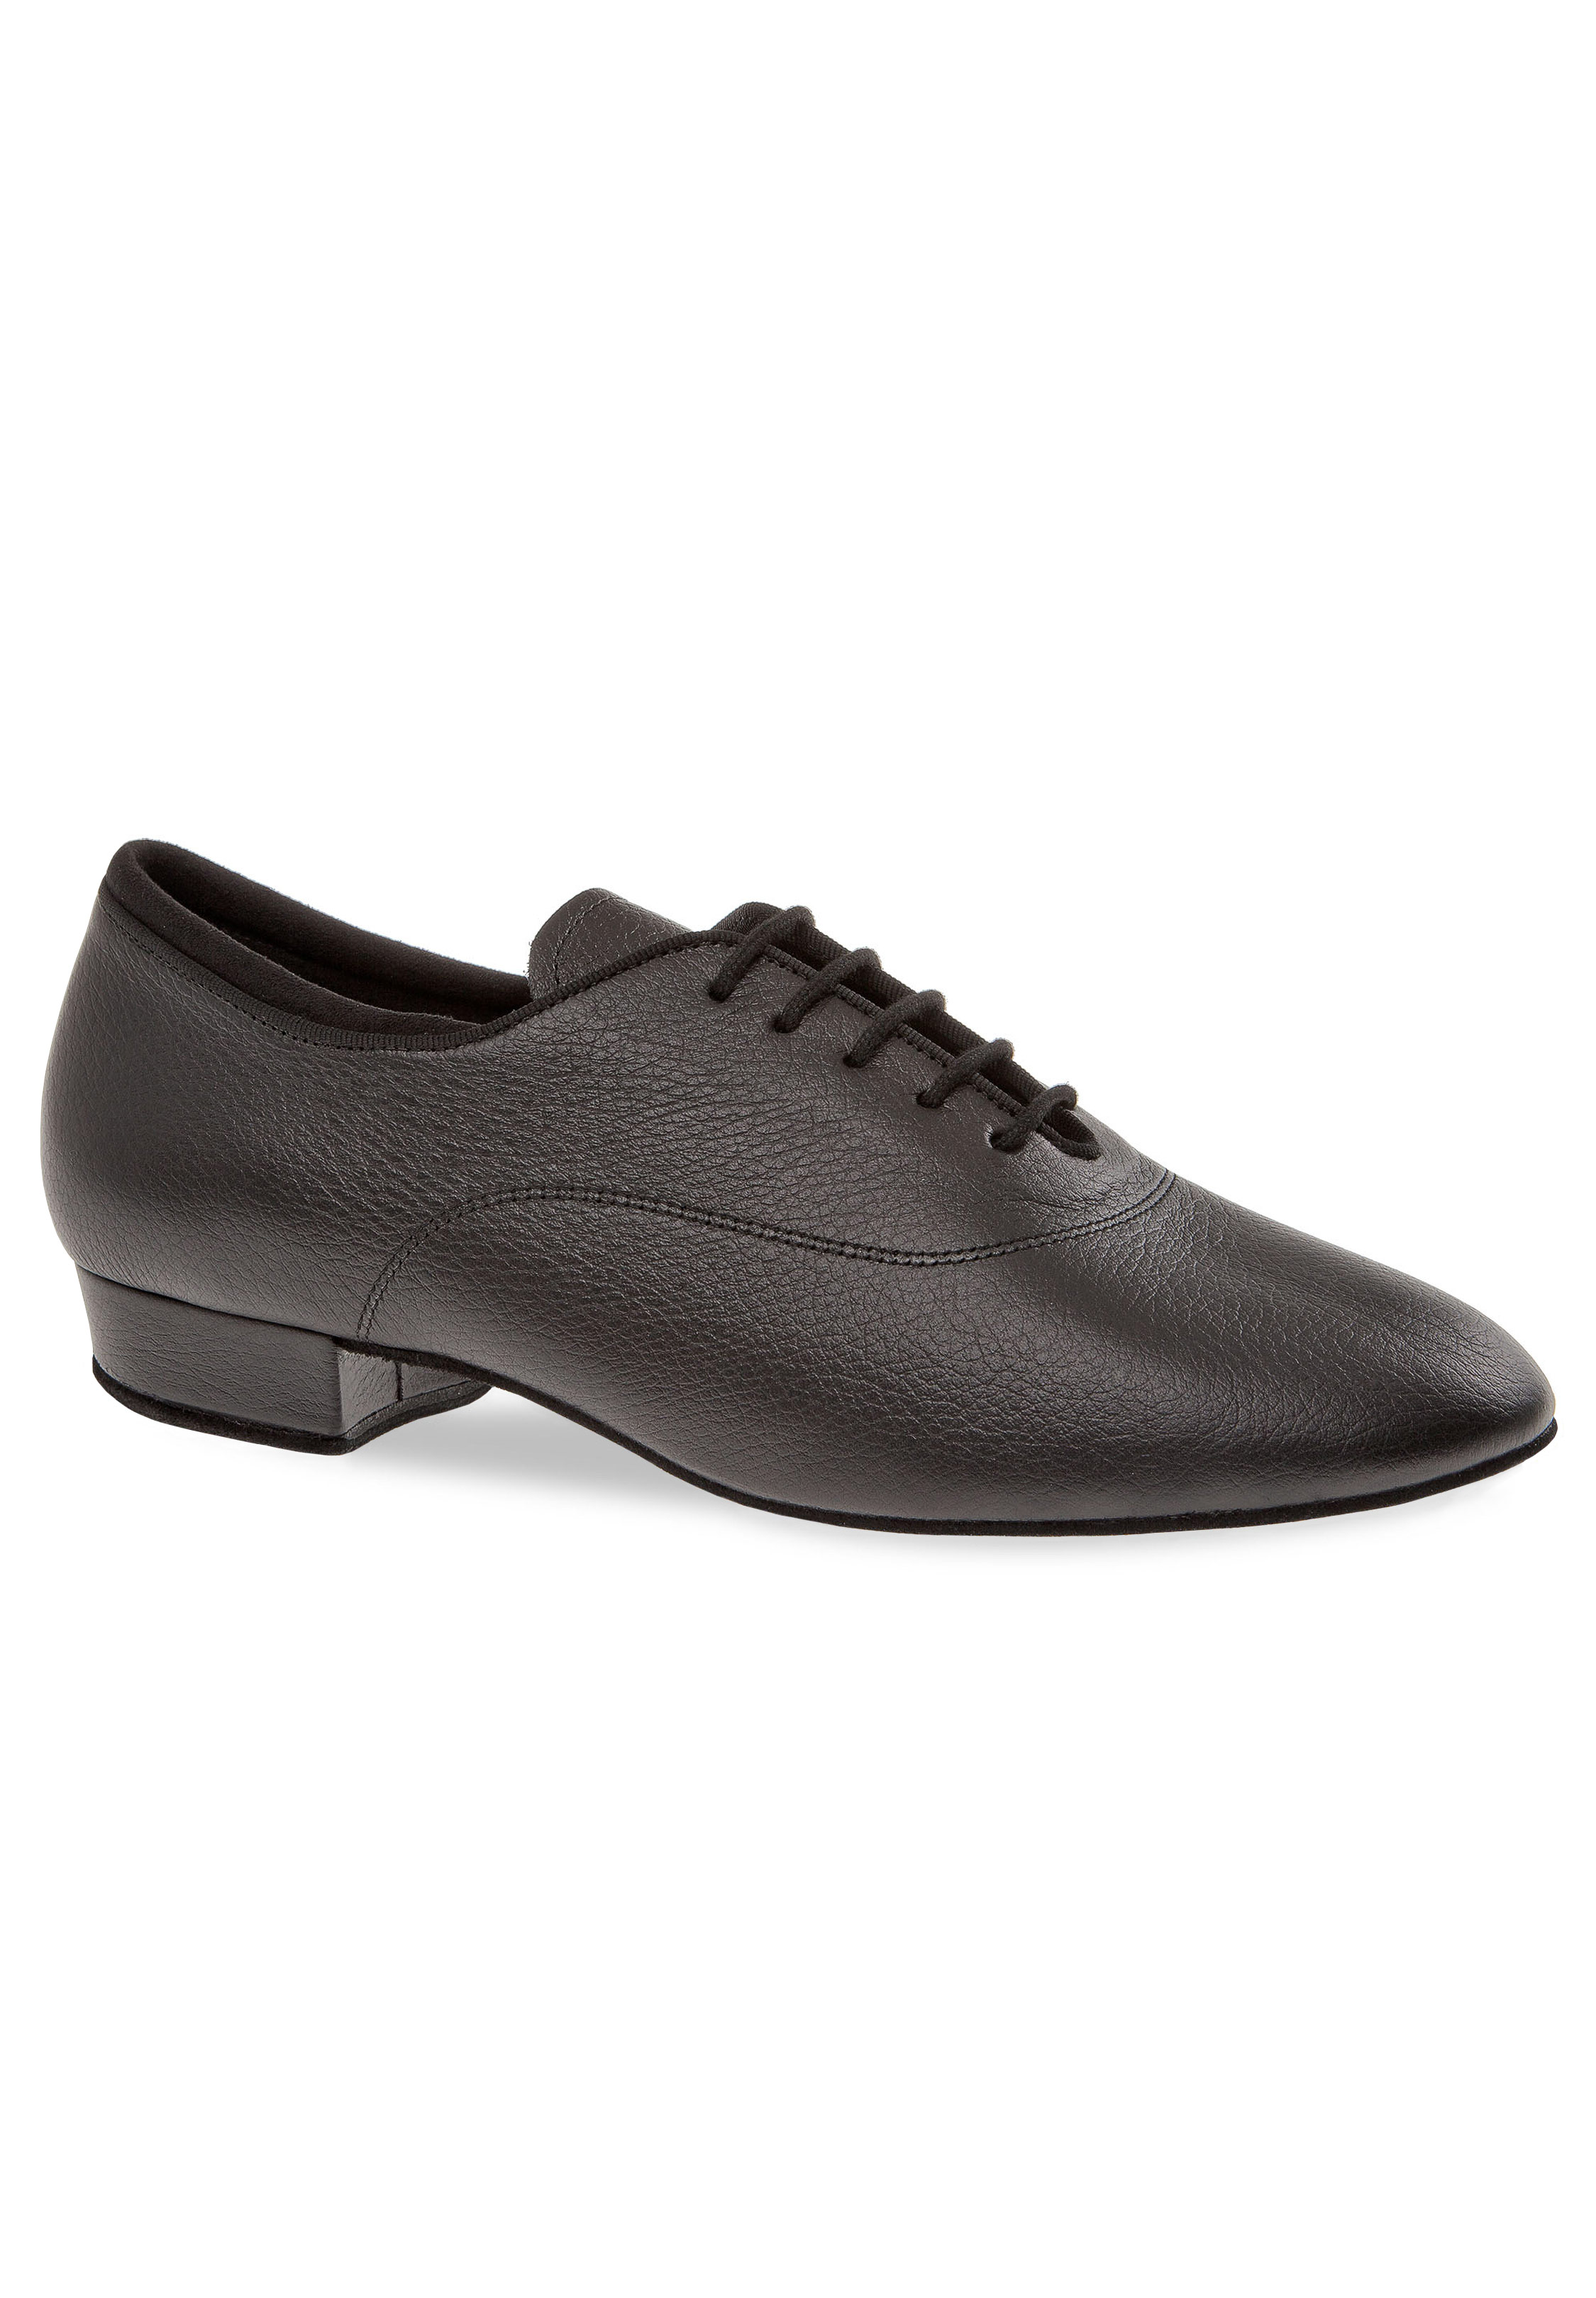 Bundle of 5 Very Fine Mens Ballroom Latin Salsa Sneaker Dance Shoes Leather SERO106BBXEB Comfortable 